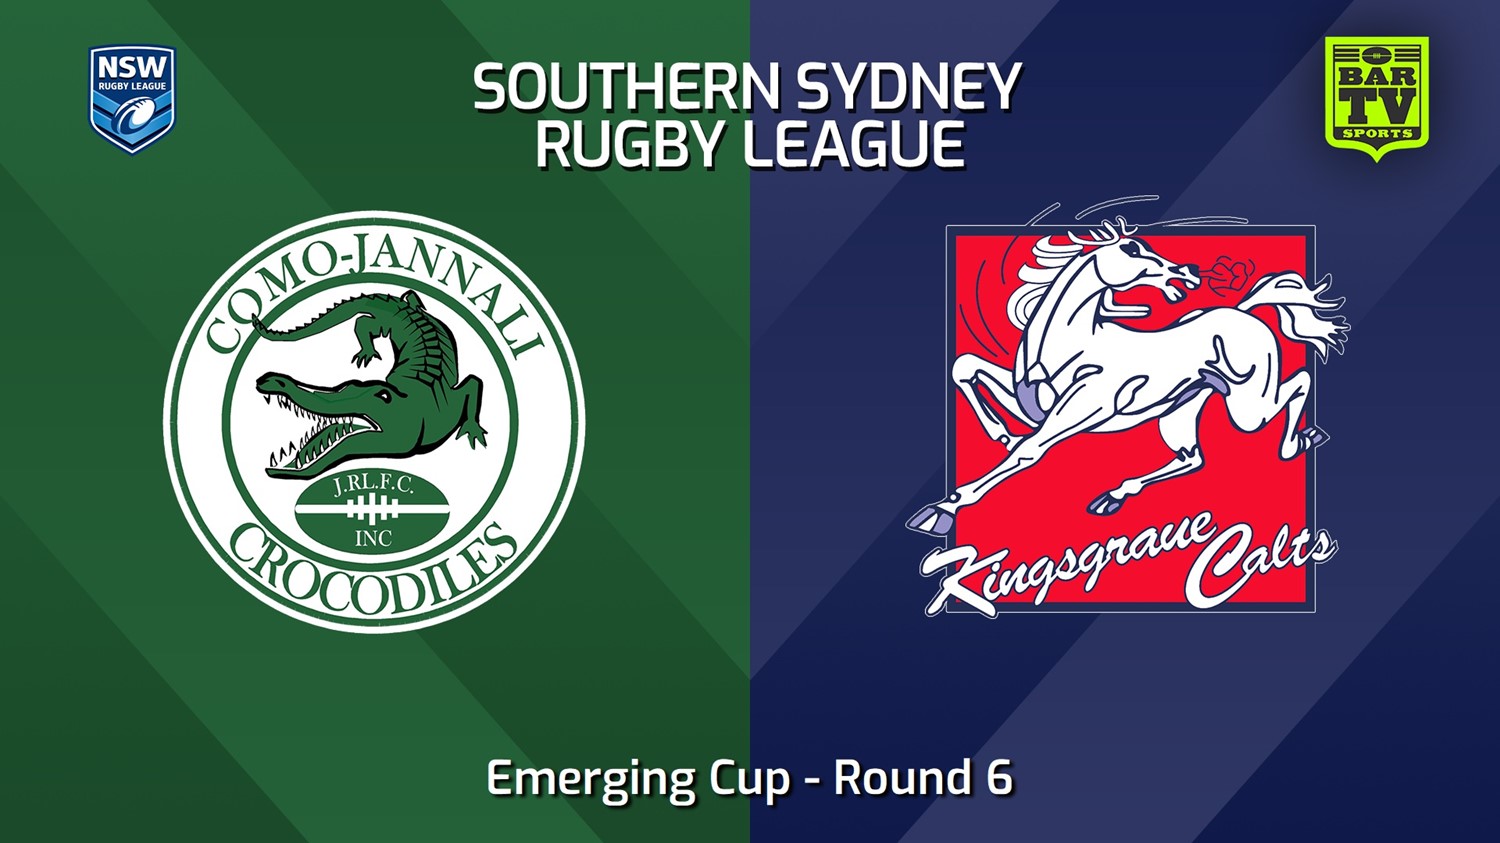 240525-video-S. Sydney Open Round 6 - Emerging Cup - Como Jannali Crocodiles v Kingsgrove Colts Slate Image